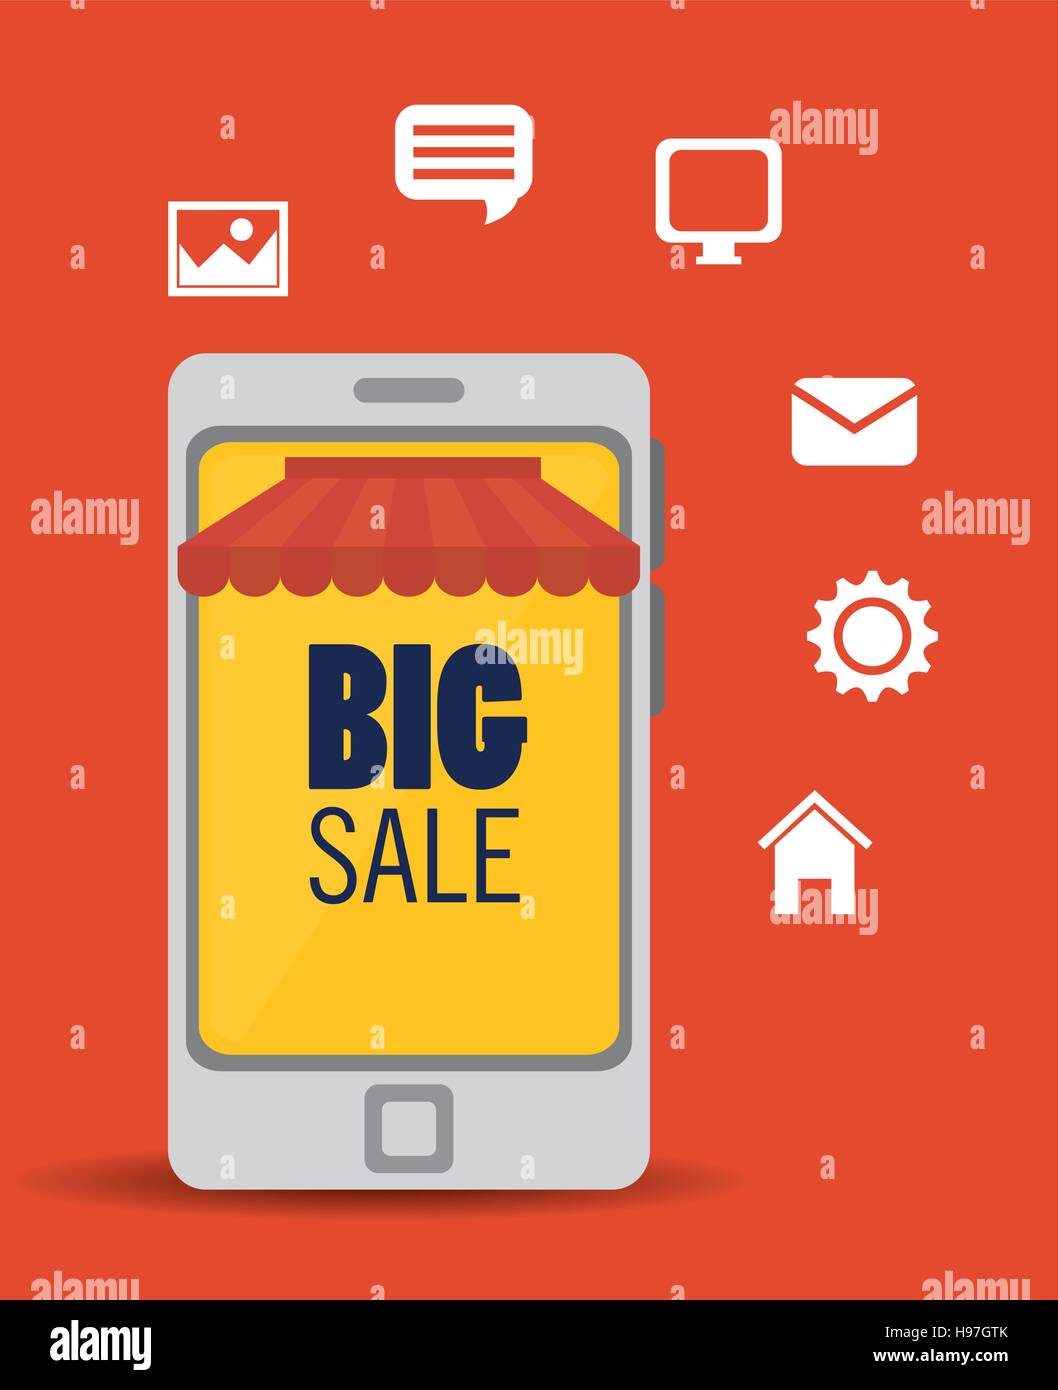 big sale online smartphone app media vector illustration eps 10 Stock Vector